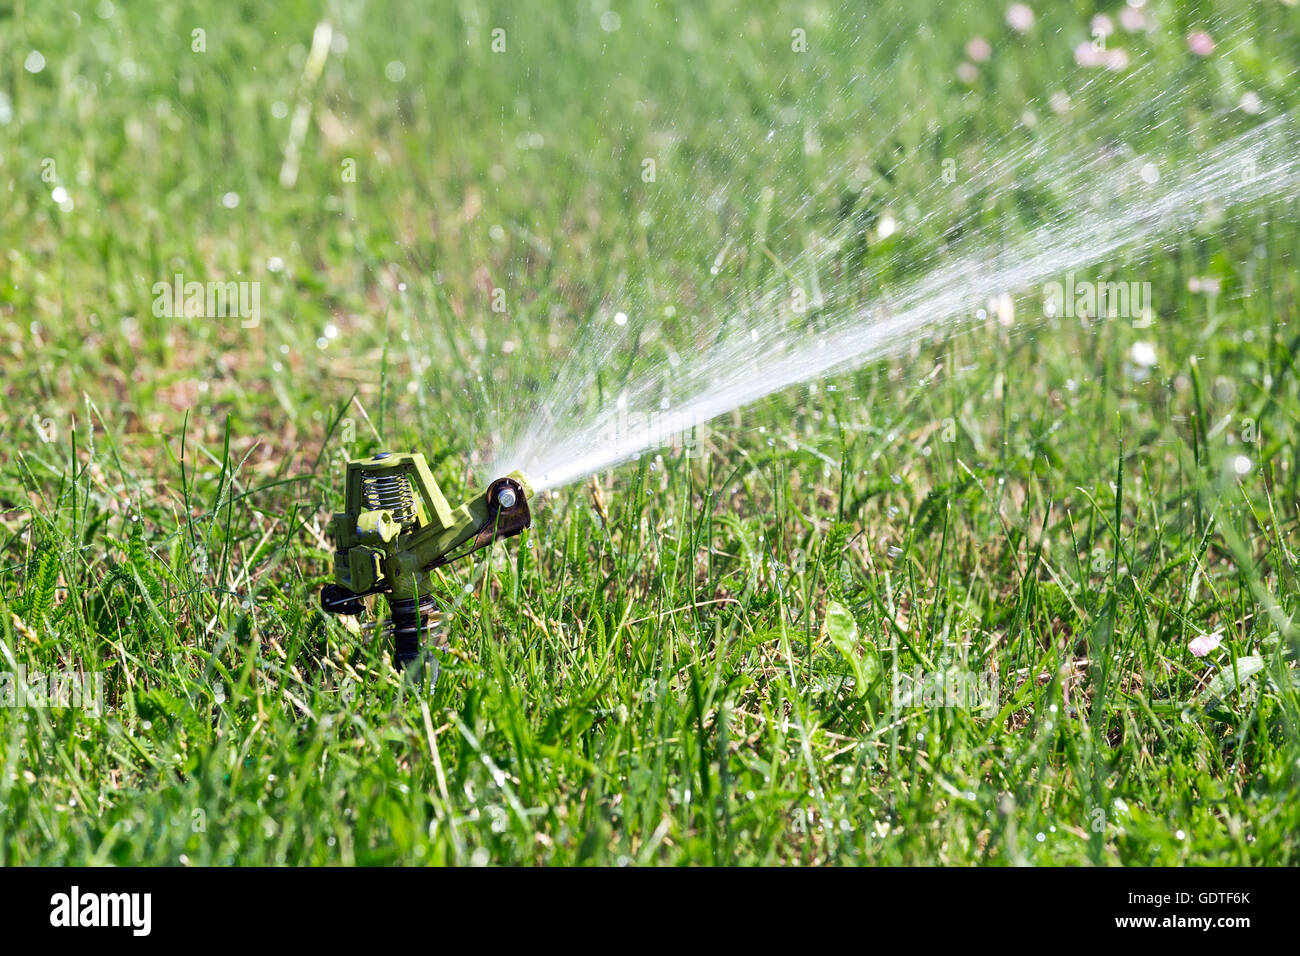 Sprinkler head spraying water on grass Stock Photo